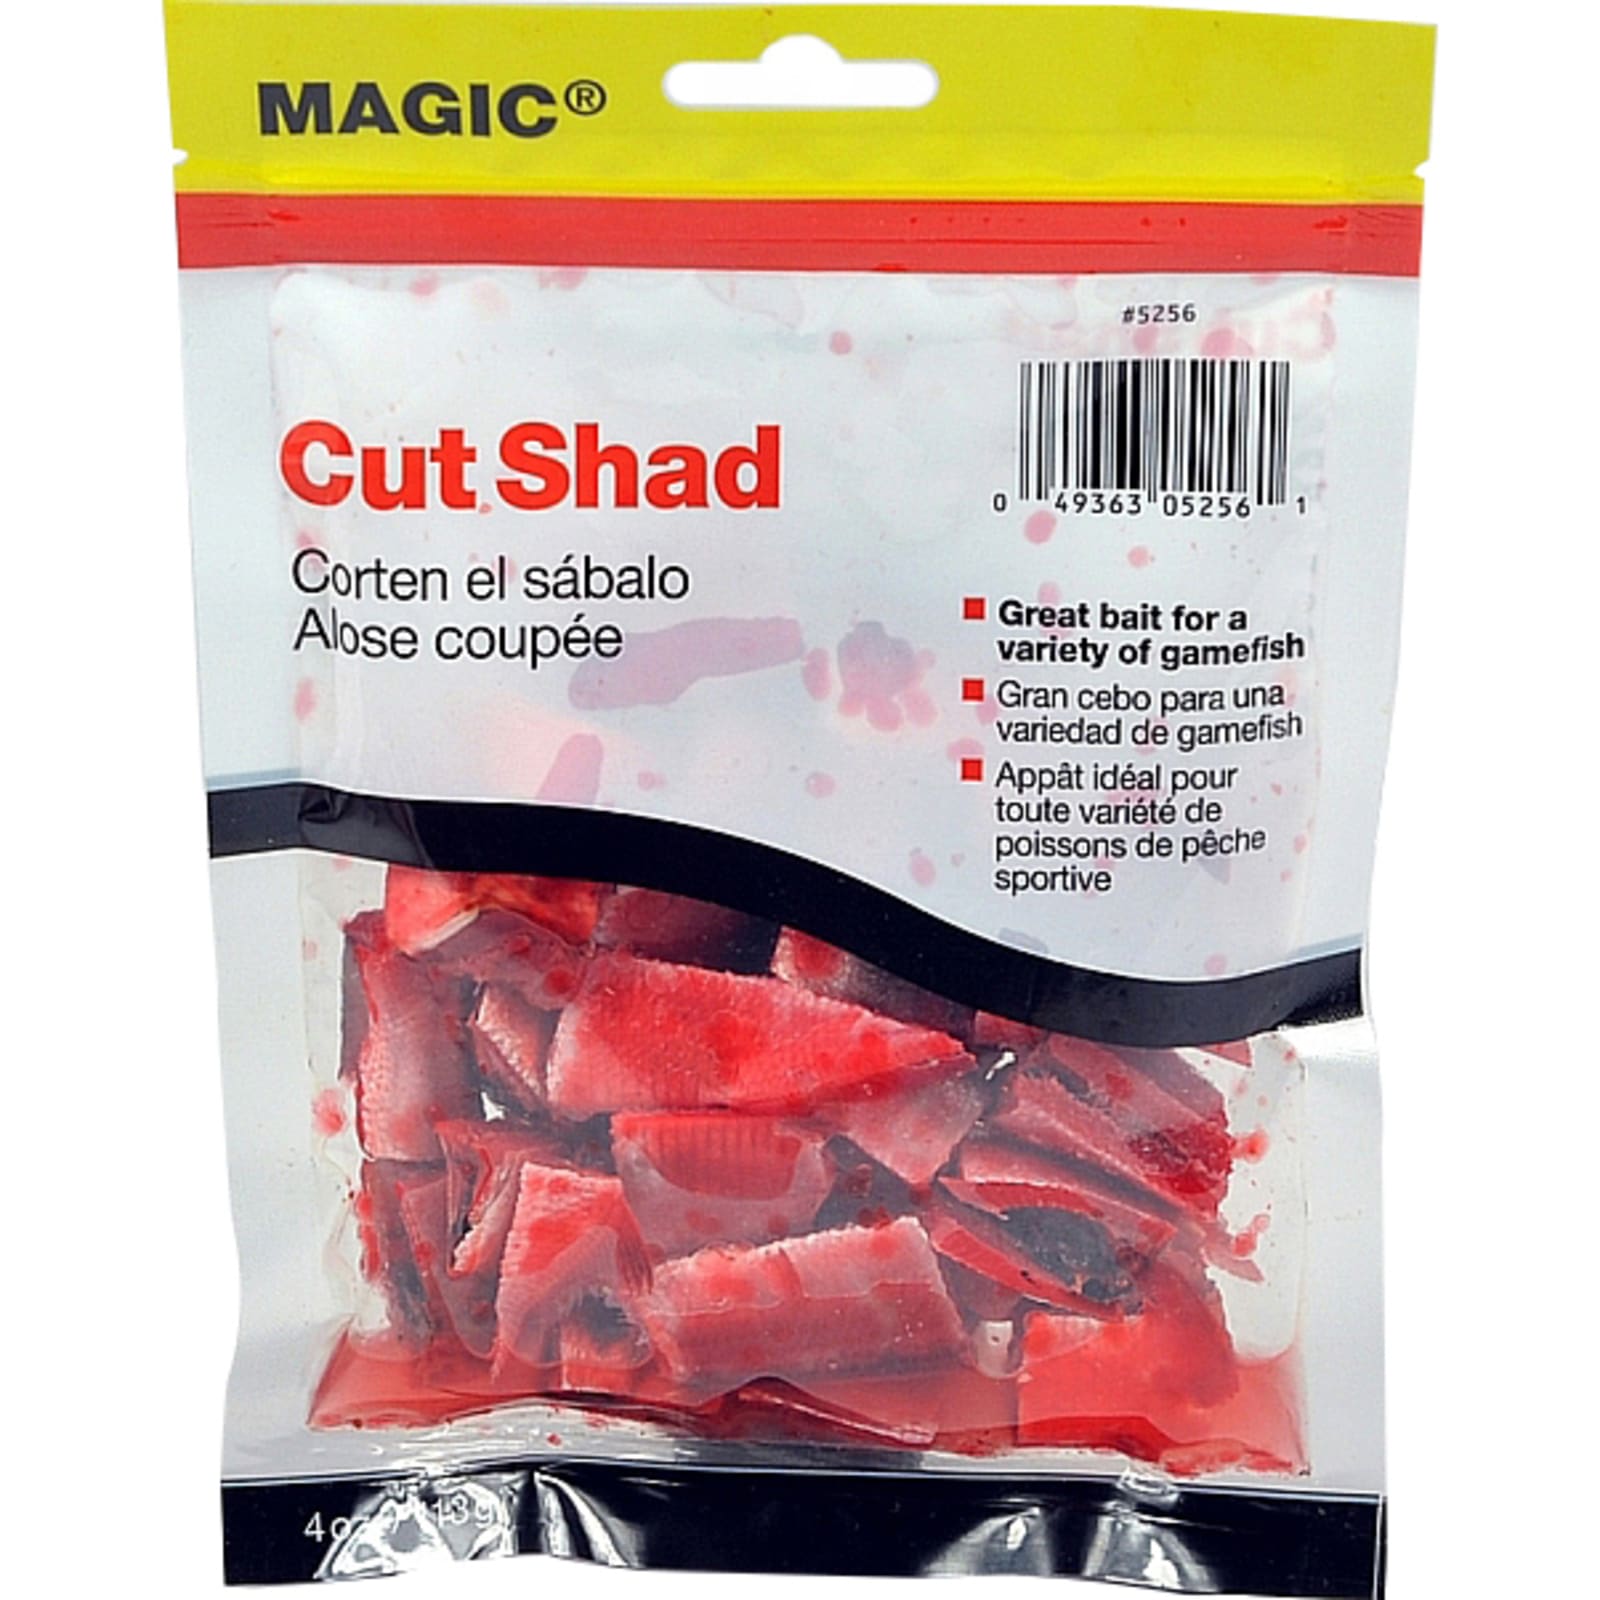 Cut Shad Catfish Bait - 4 Oz. by Magic at Fleet Farm